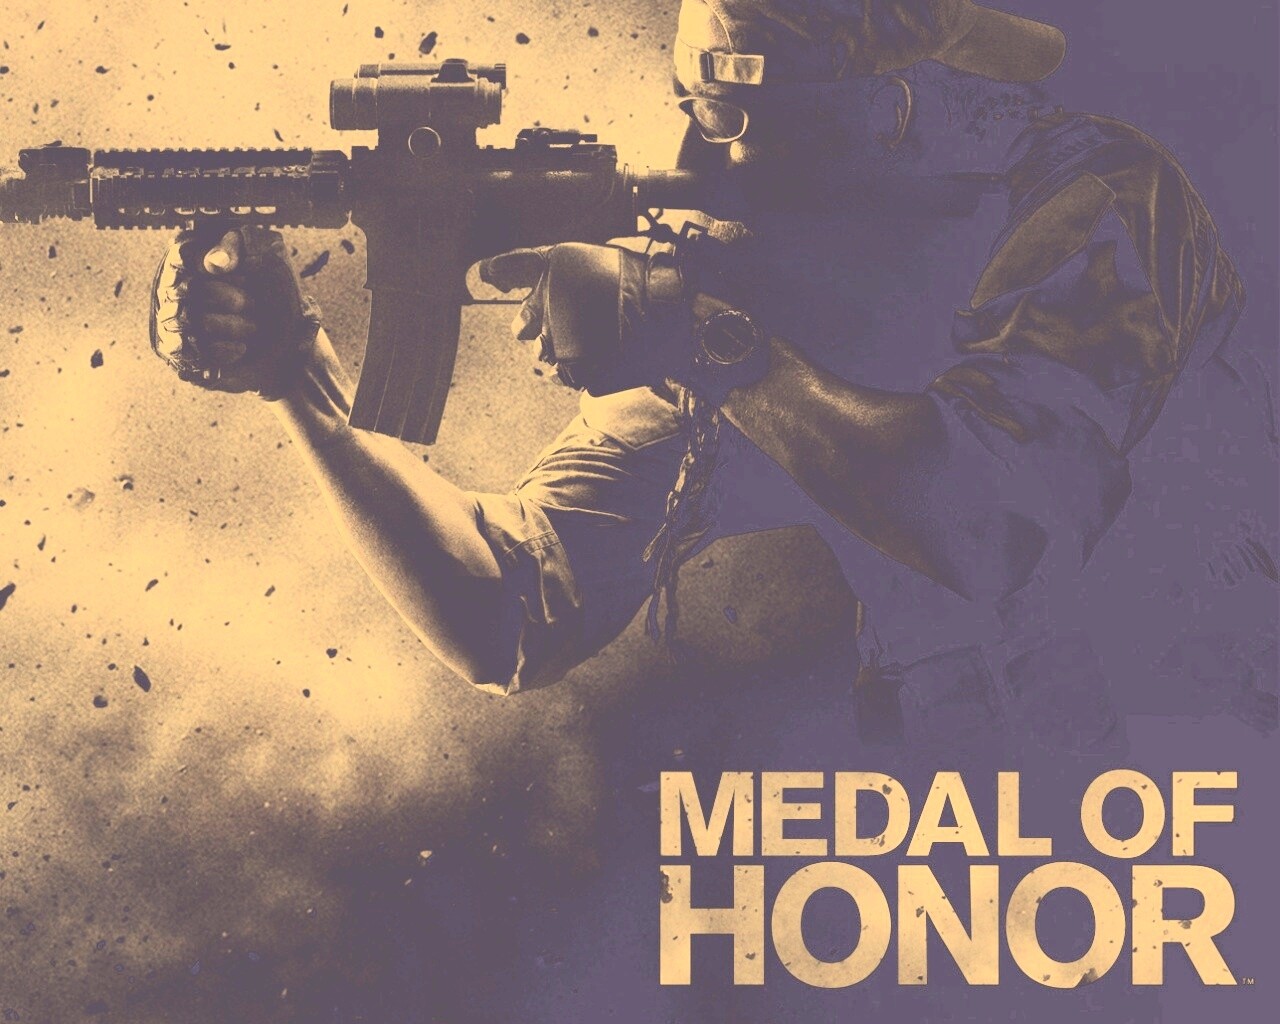 Medal of honor отзывы. Medal of Honor 2010 обложка. Medal of Honor обои. Рабочий стол медаль оф хонор. Медал оф хонор заставка.